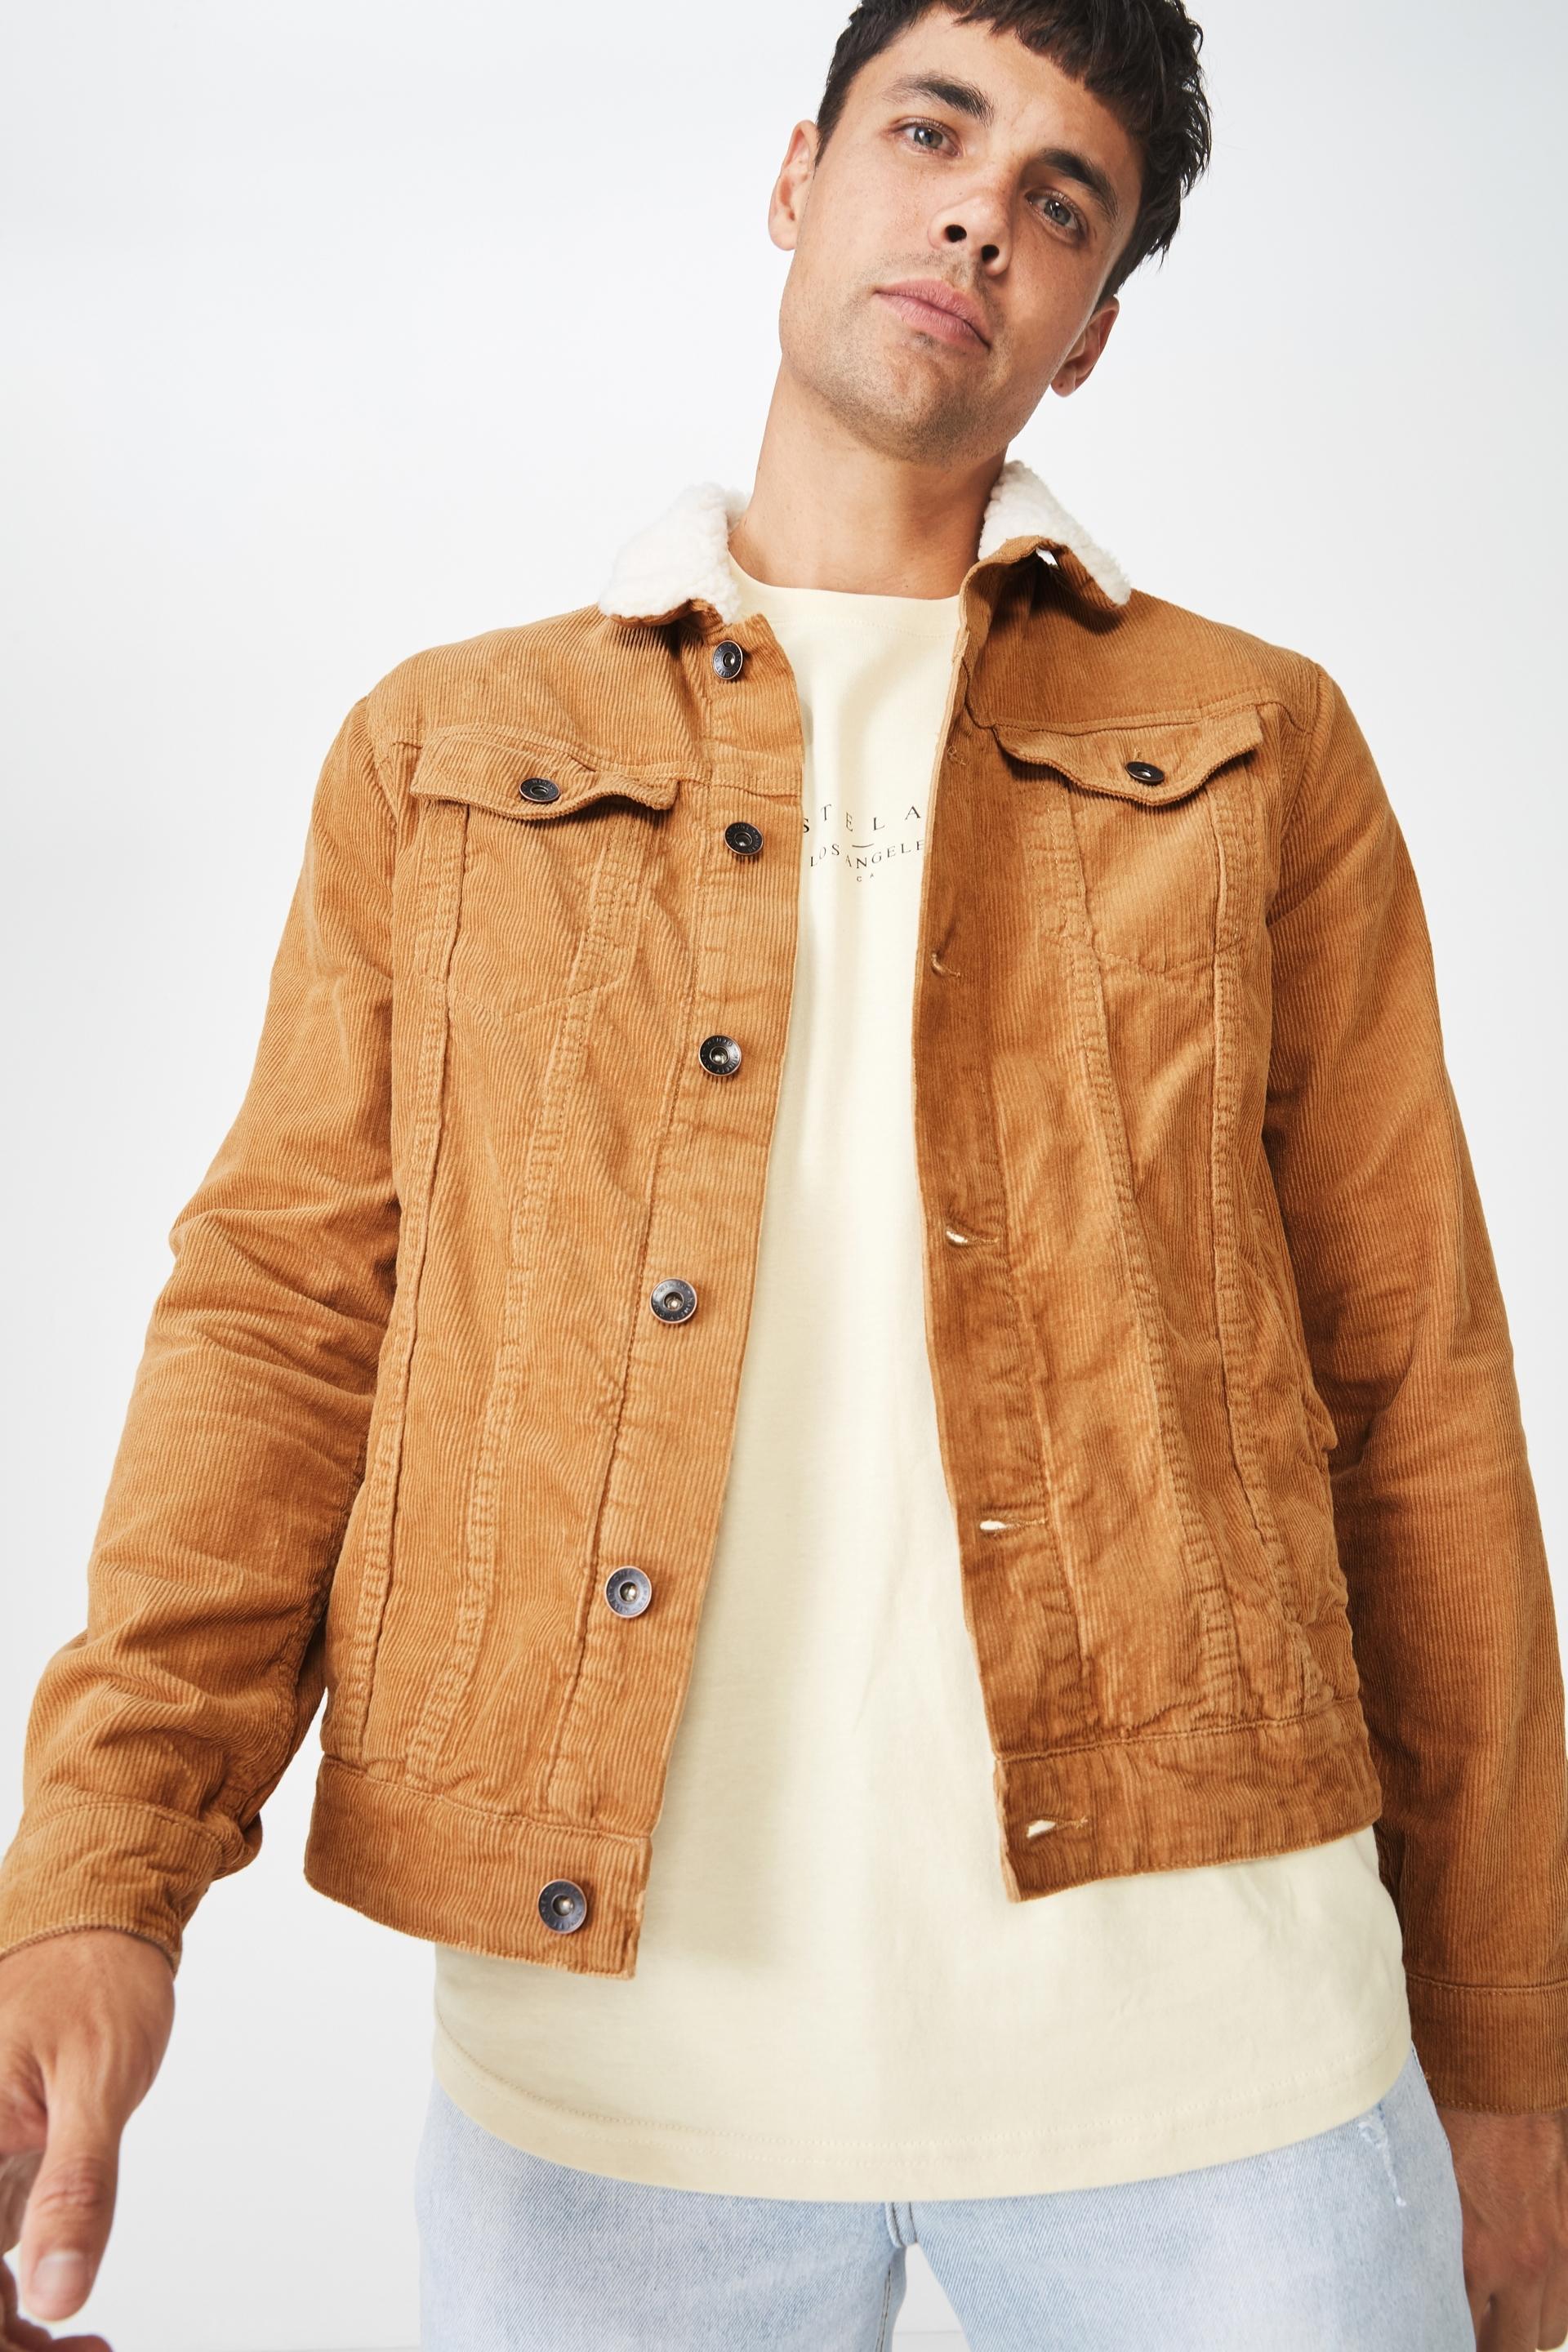 Sherpa collar rodeo jacket - mustard / tan cord Cotton On Jackets ...